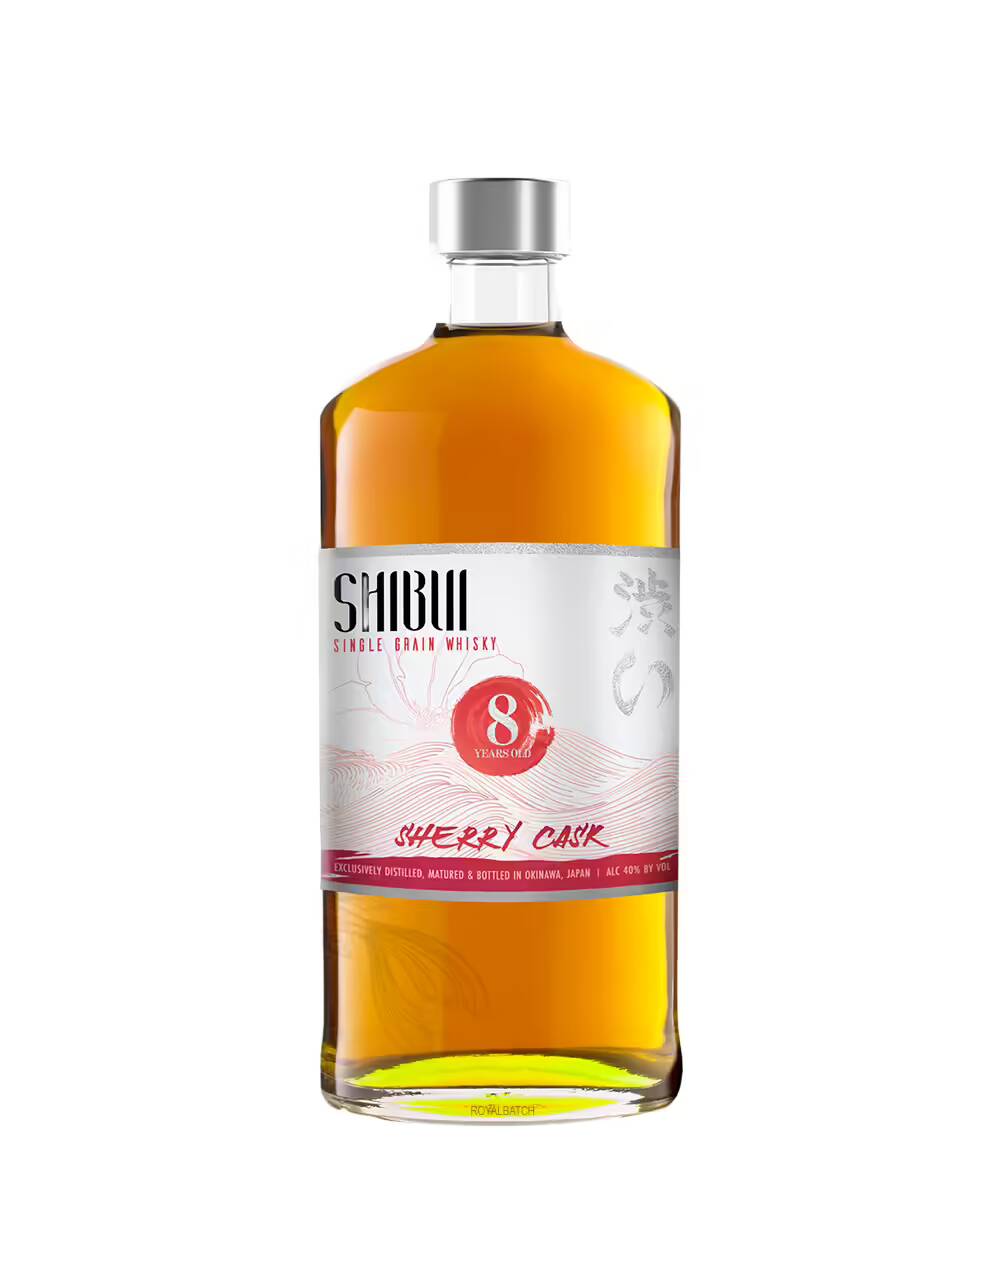 Shibui Sherry Cask 8 Year Old Single Grain Whisky